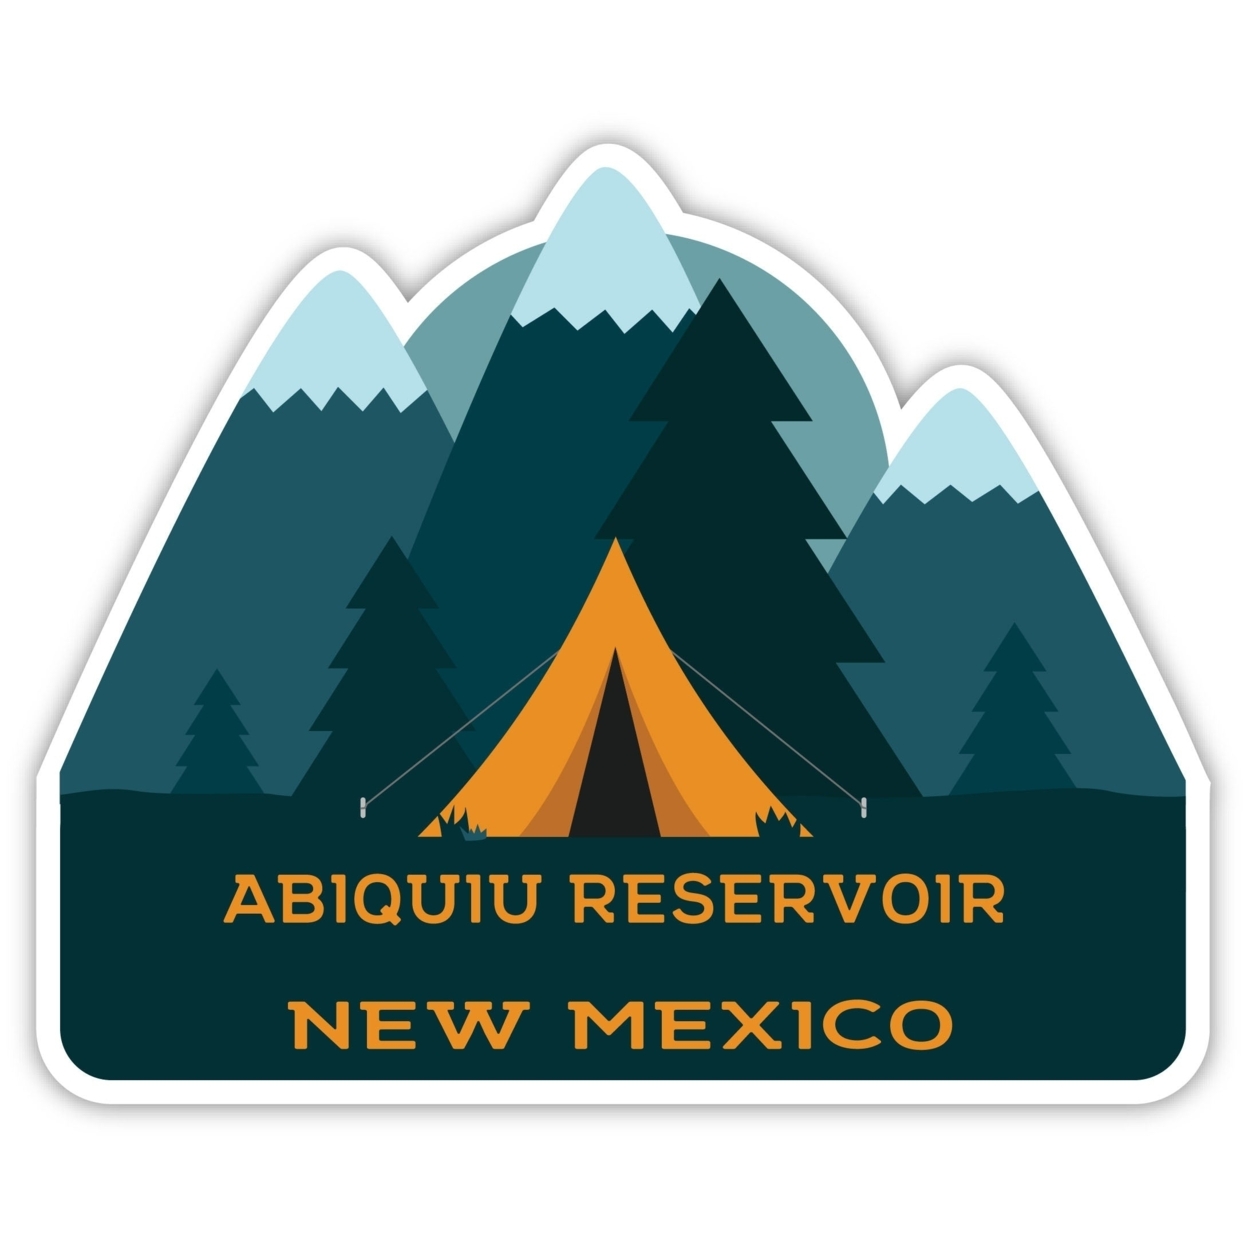 Abiquiu Reservoir New Mexico Souvenir Decorative Stickers (Choose Theme And Size) - 4-Pack, 10-Inch, Tent